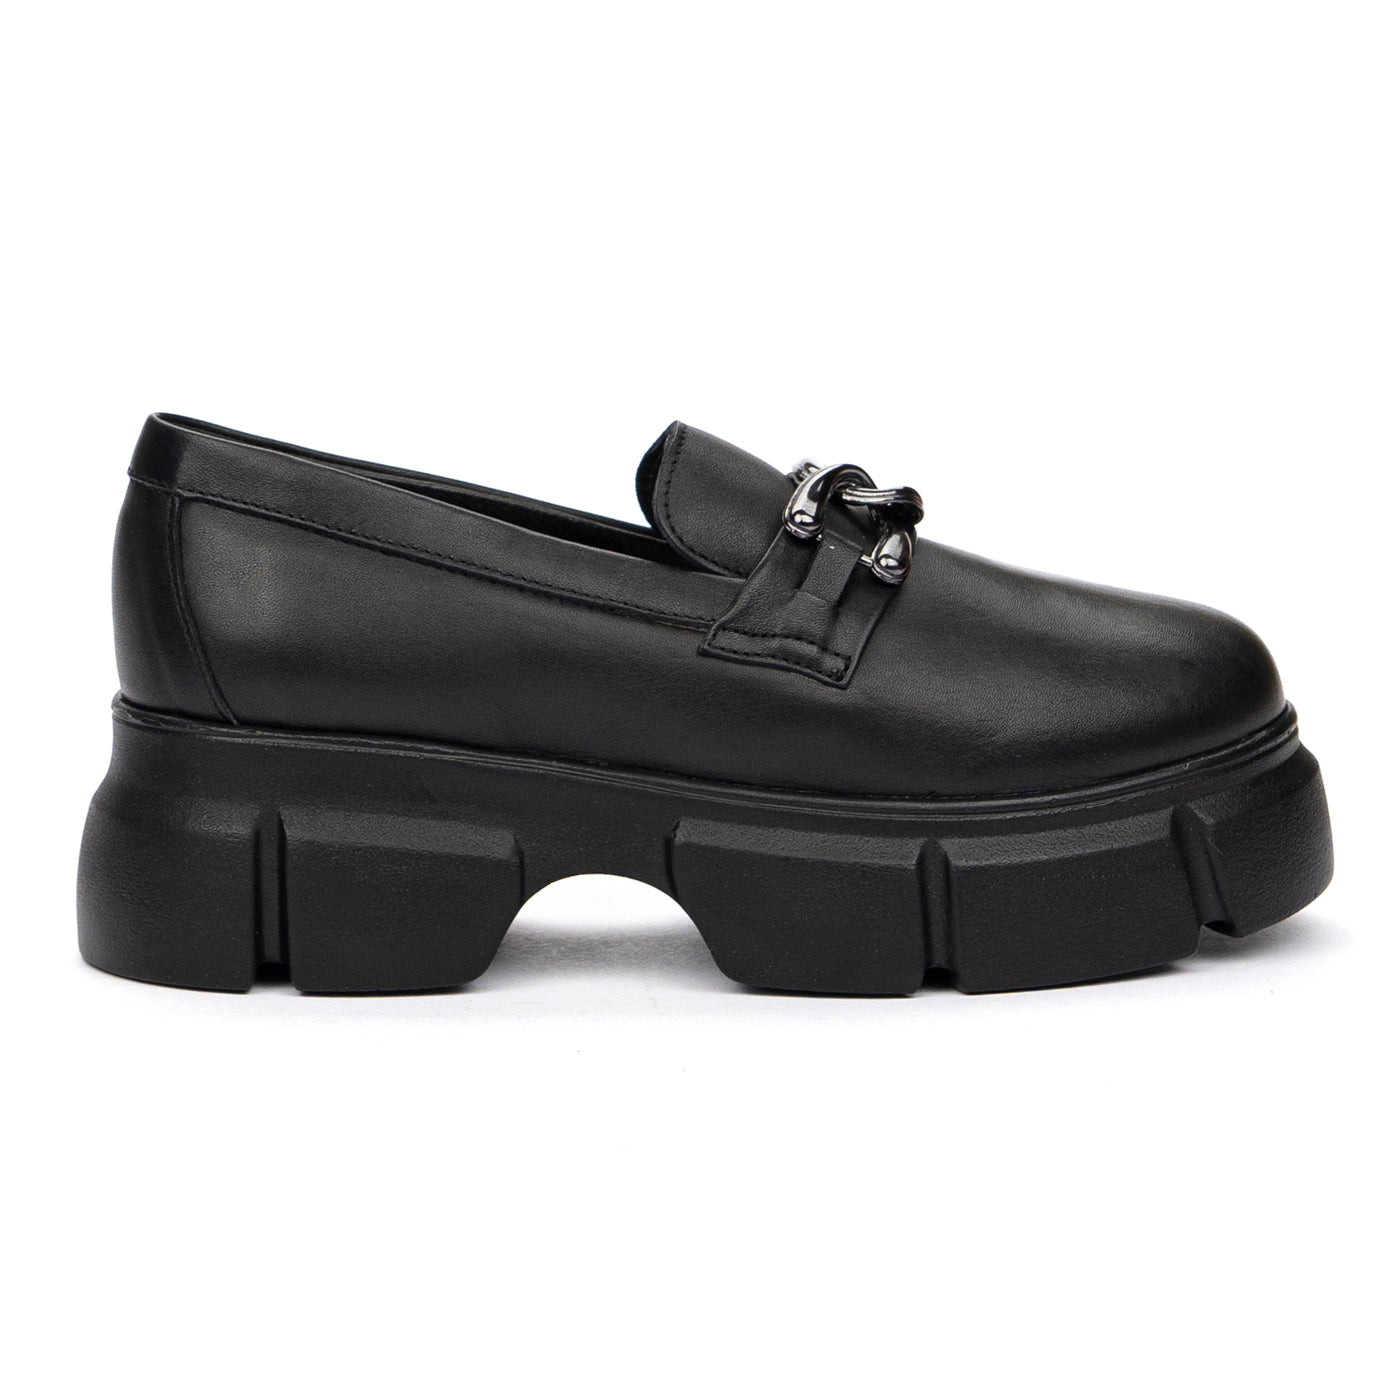 Pantofi Dama Casual cu Toc 5 Cm Negri din Piele 8530